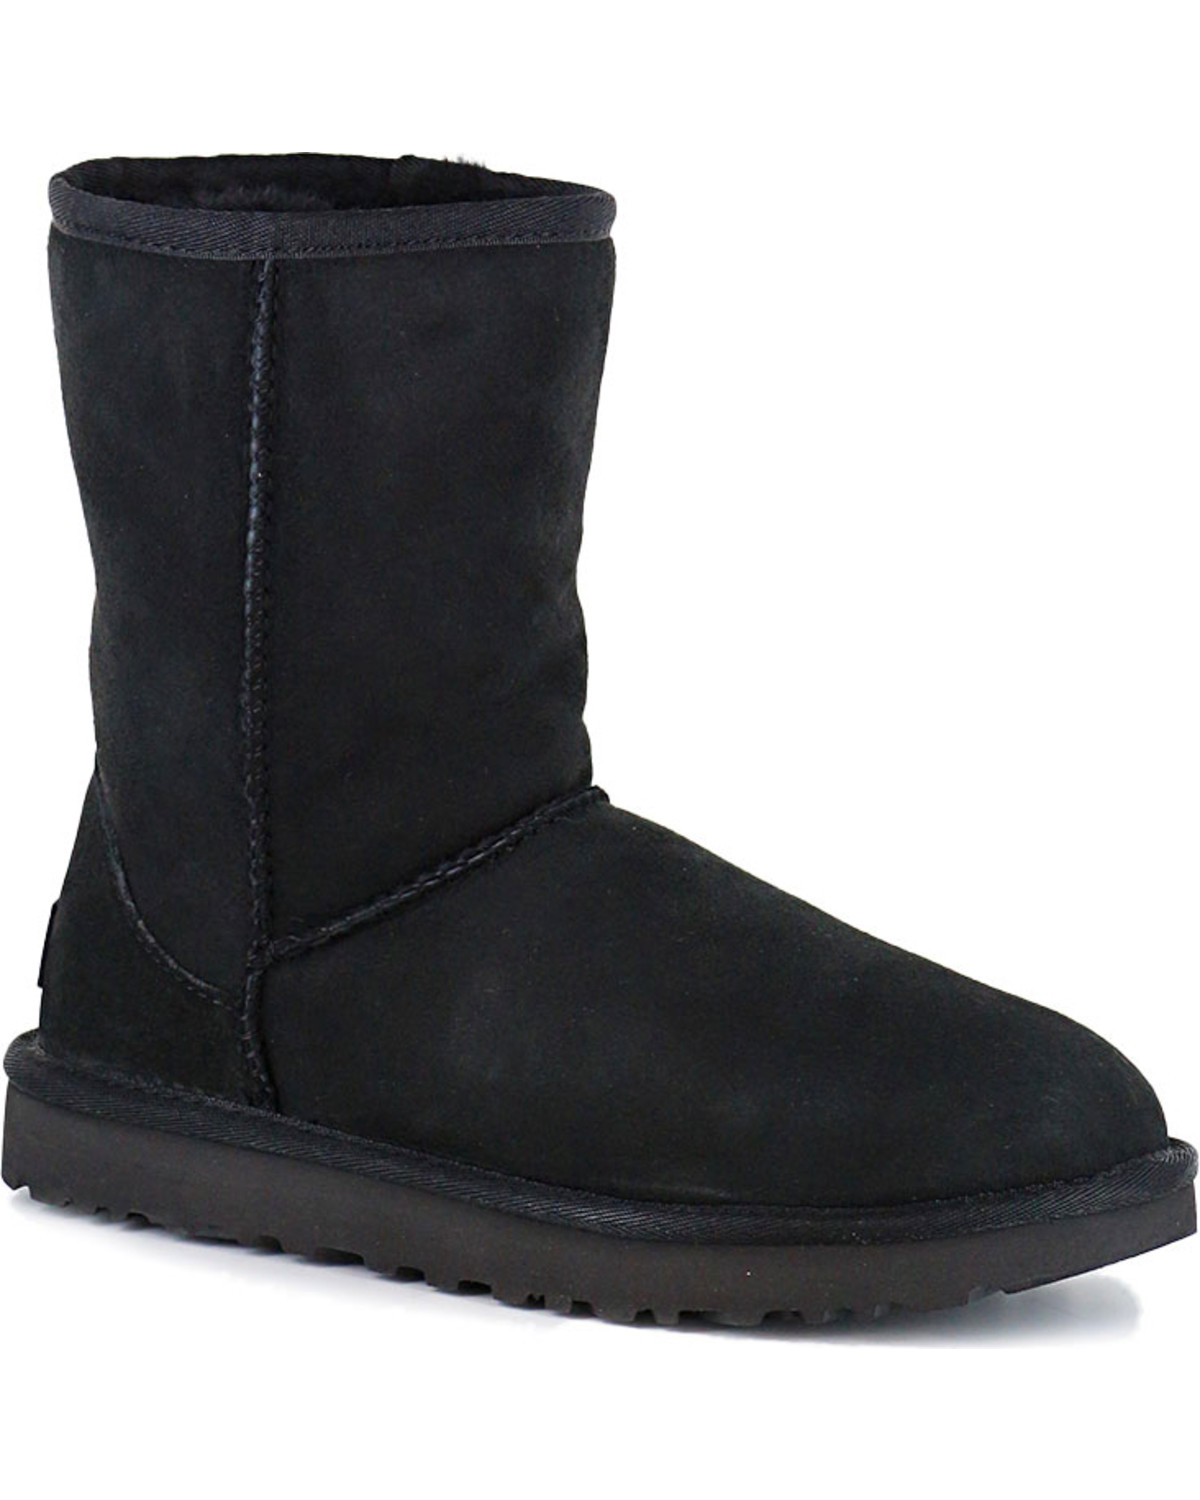 ugg black boots